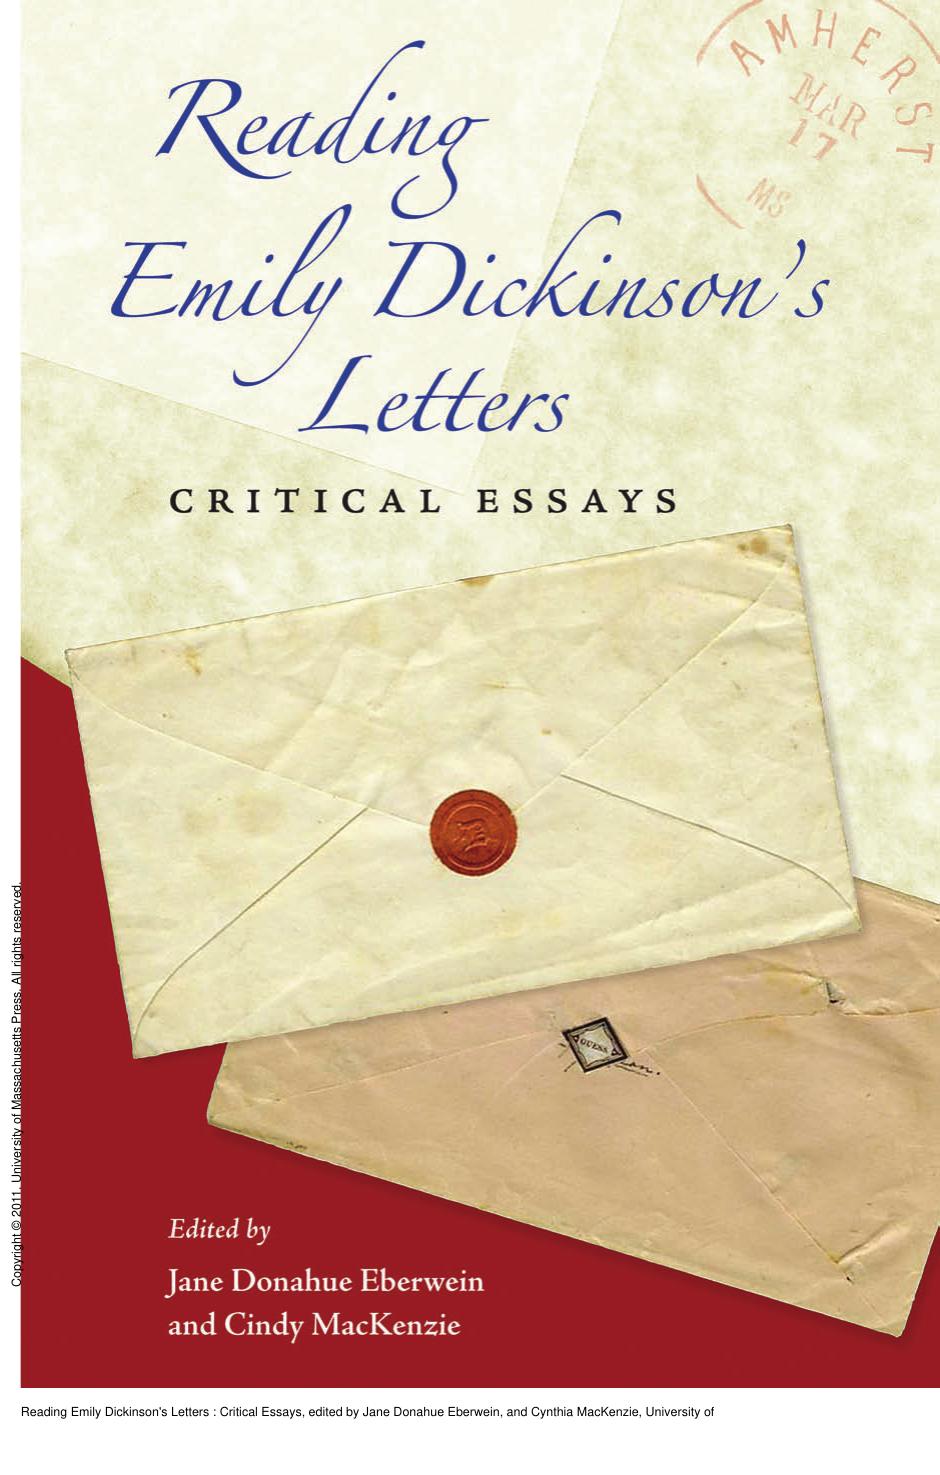 Reading Emily Dickinson's Letters : Critical Essays by Jane Donahue Eberwein; Cynthia MacKenzie; Marietta Messmer